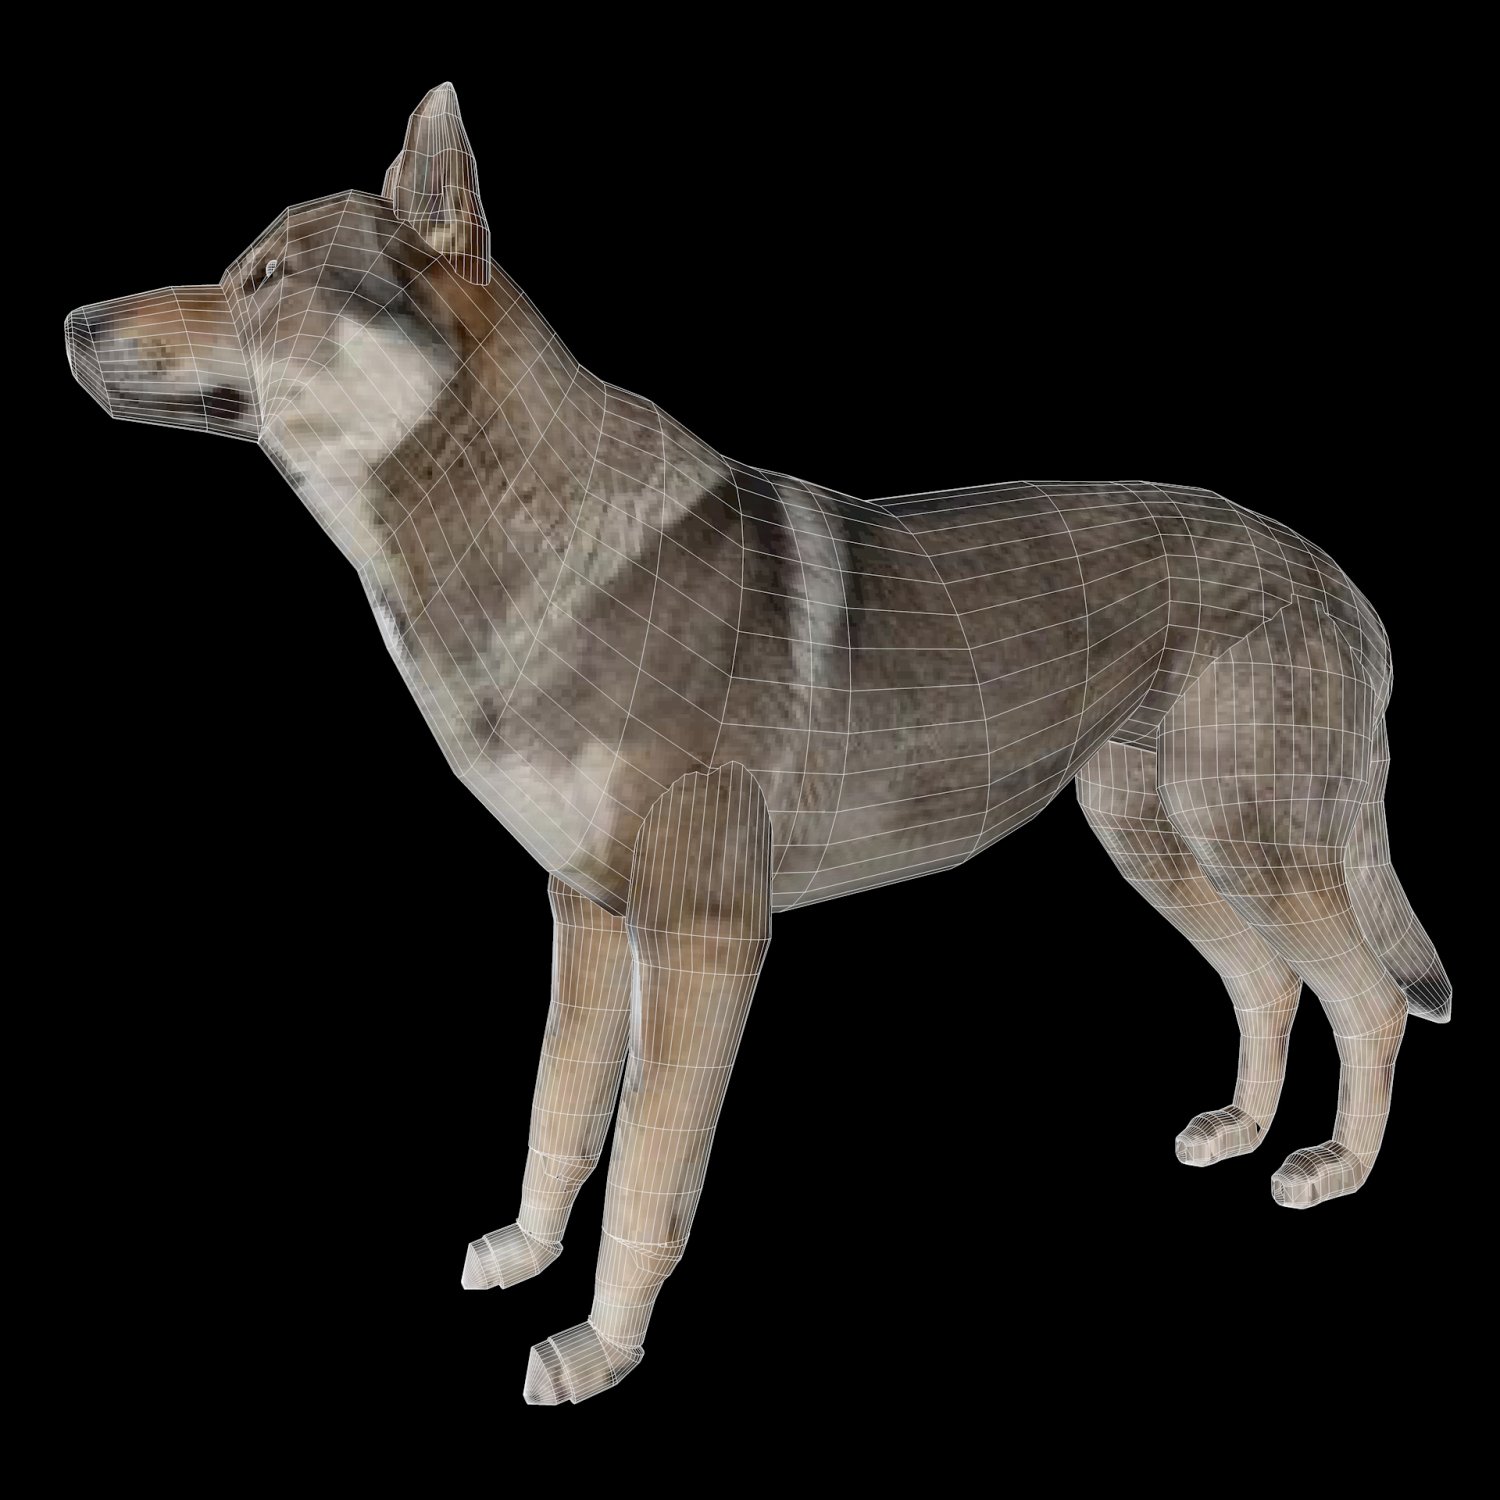 Wolf models. Модель волка. Волк 3d модель. Модель волка МЧС. Звуковая модель волк.